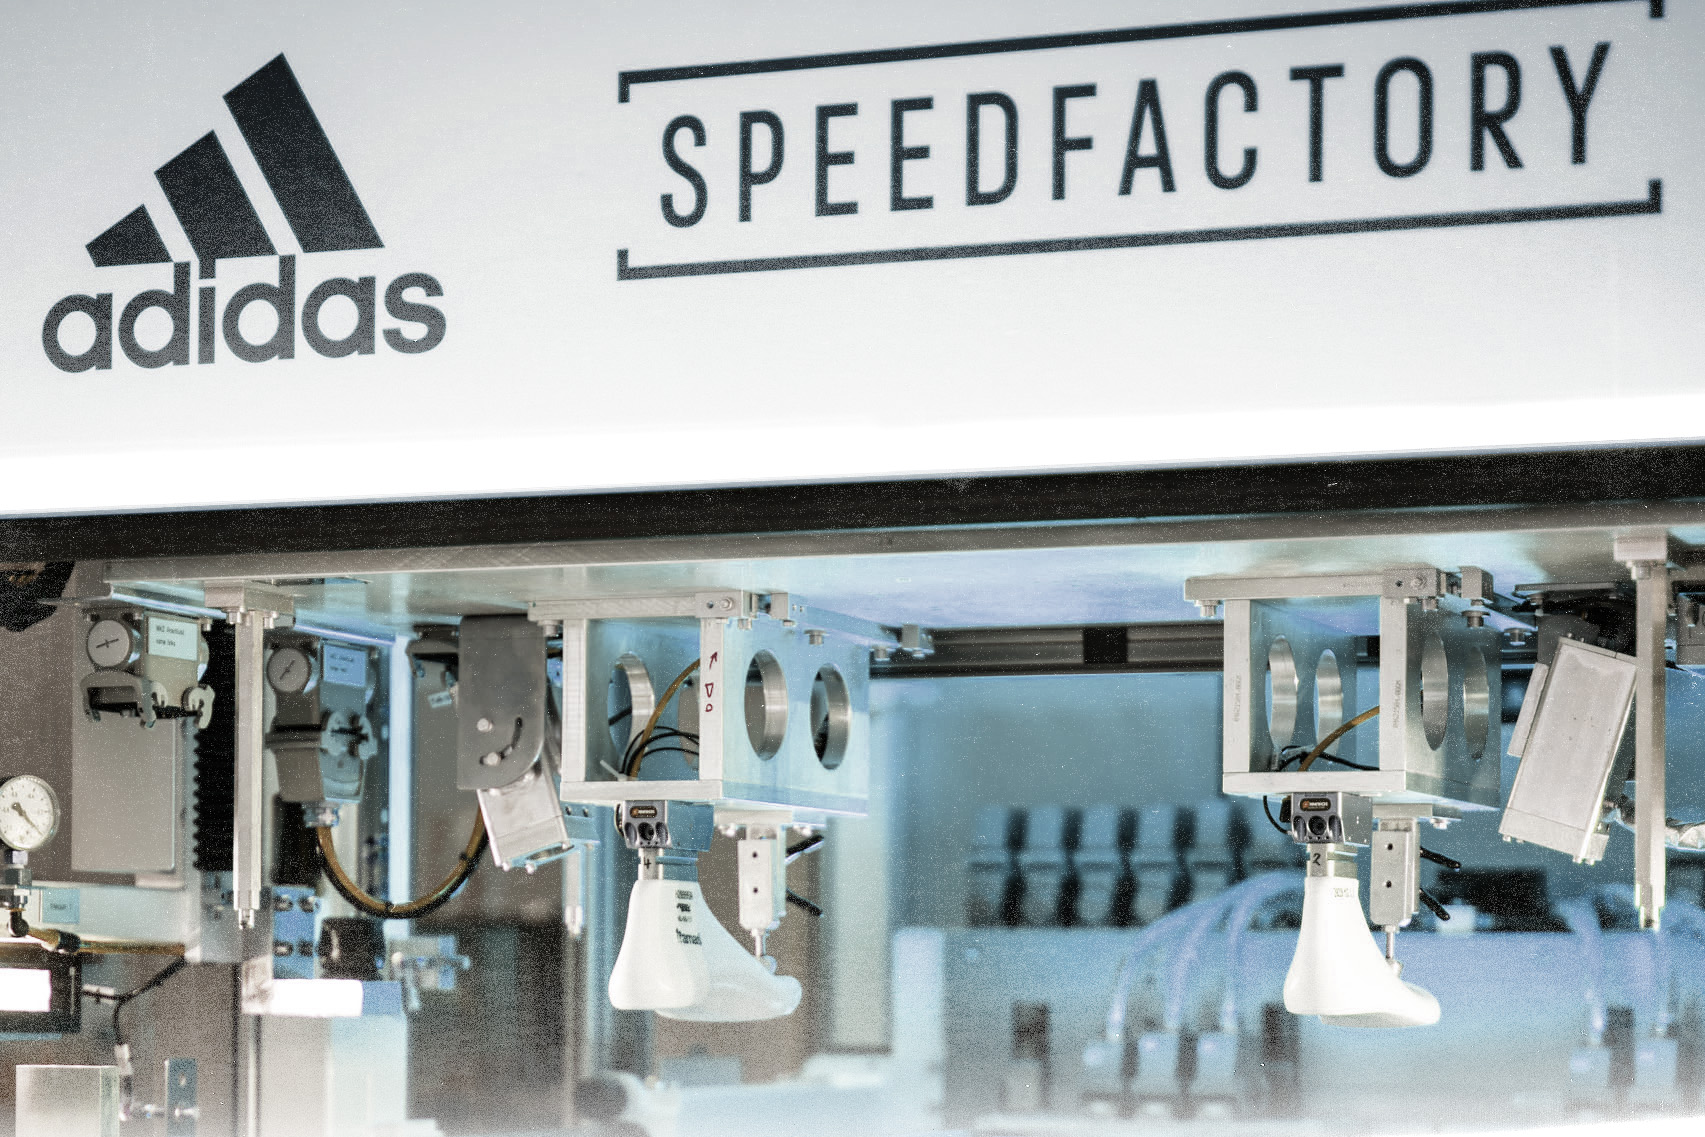 adidas AM4 London speedfactory 2